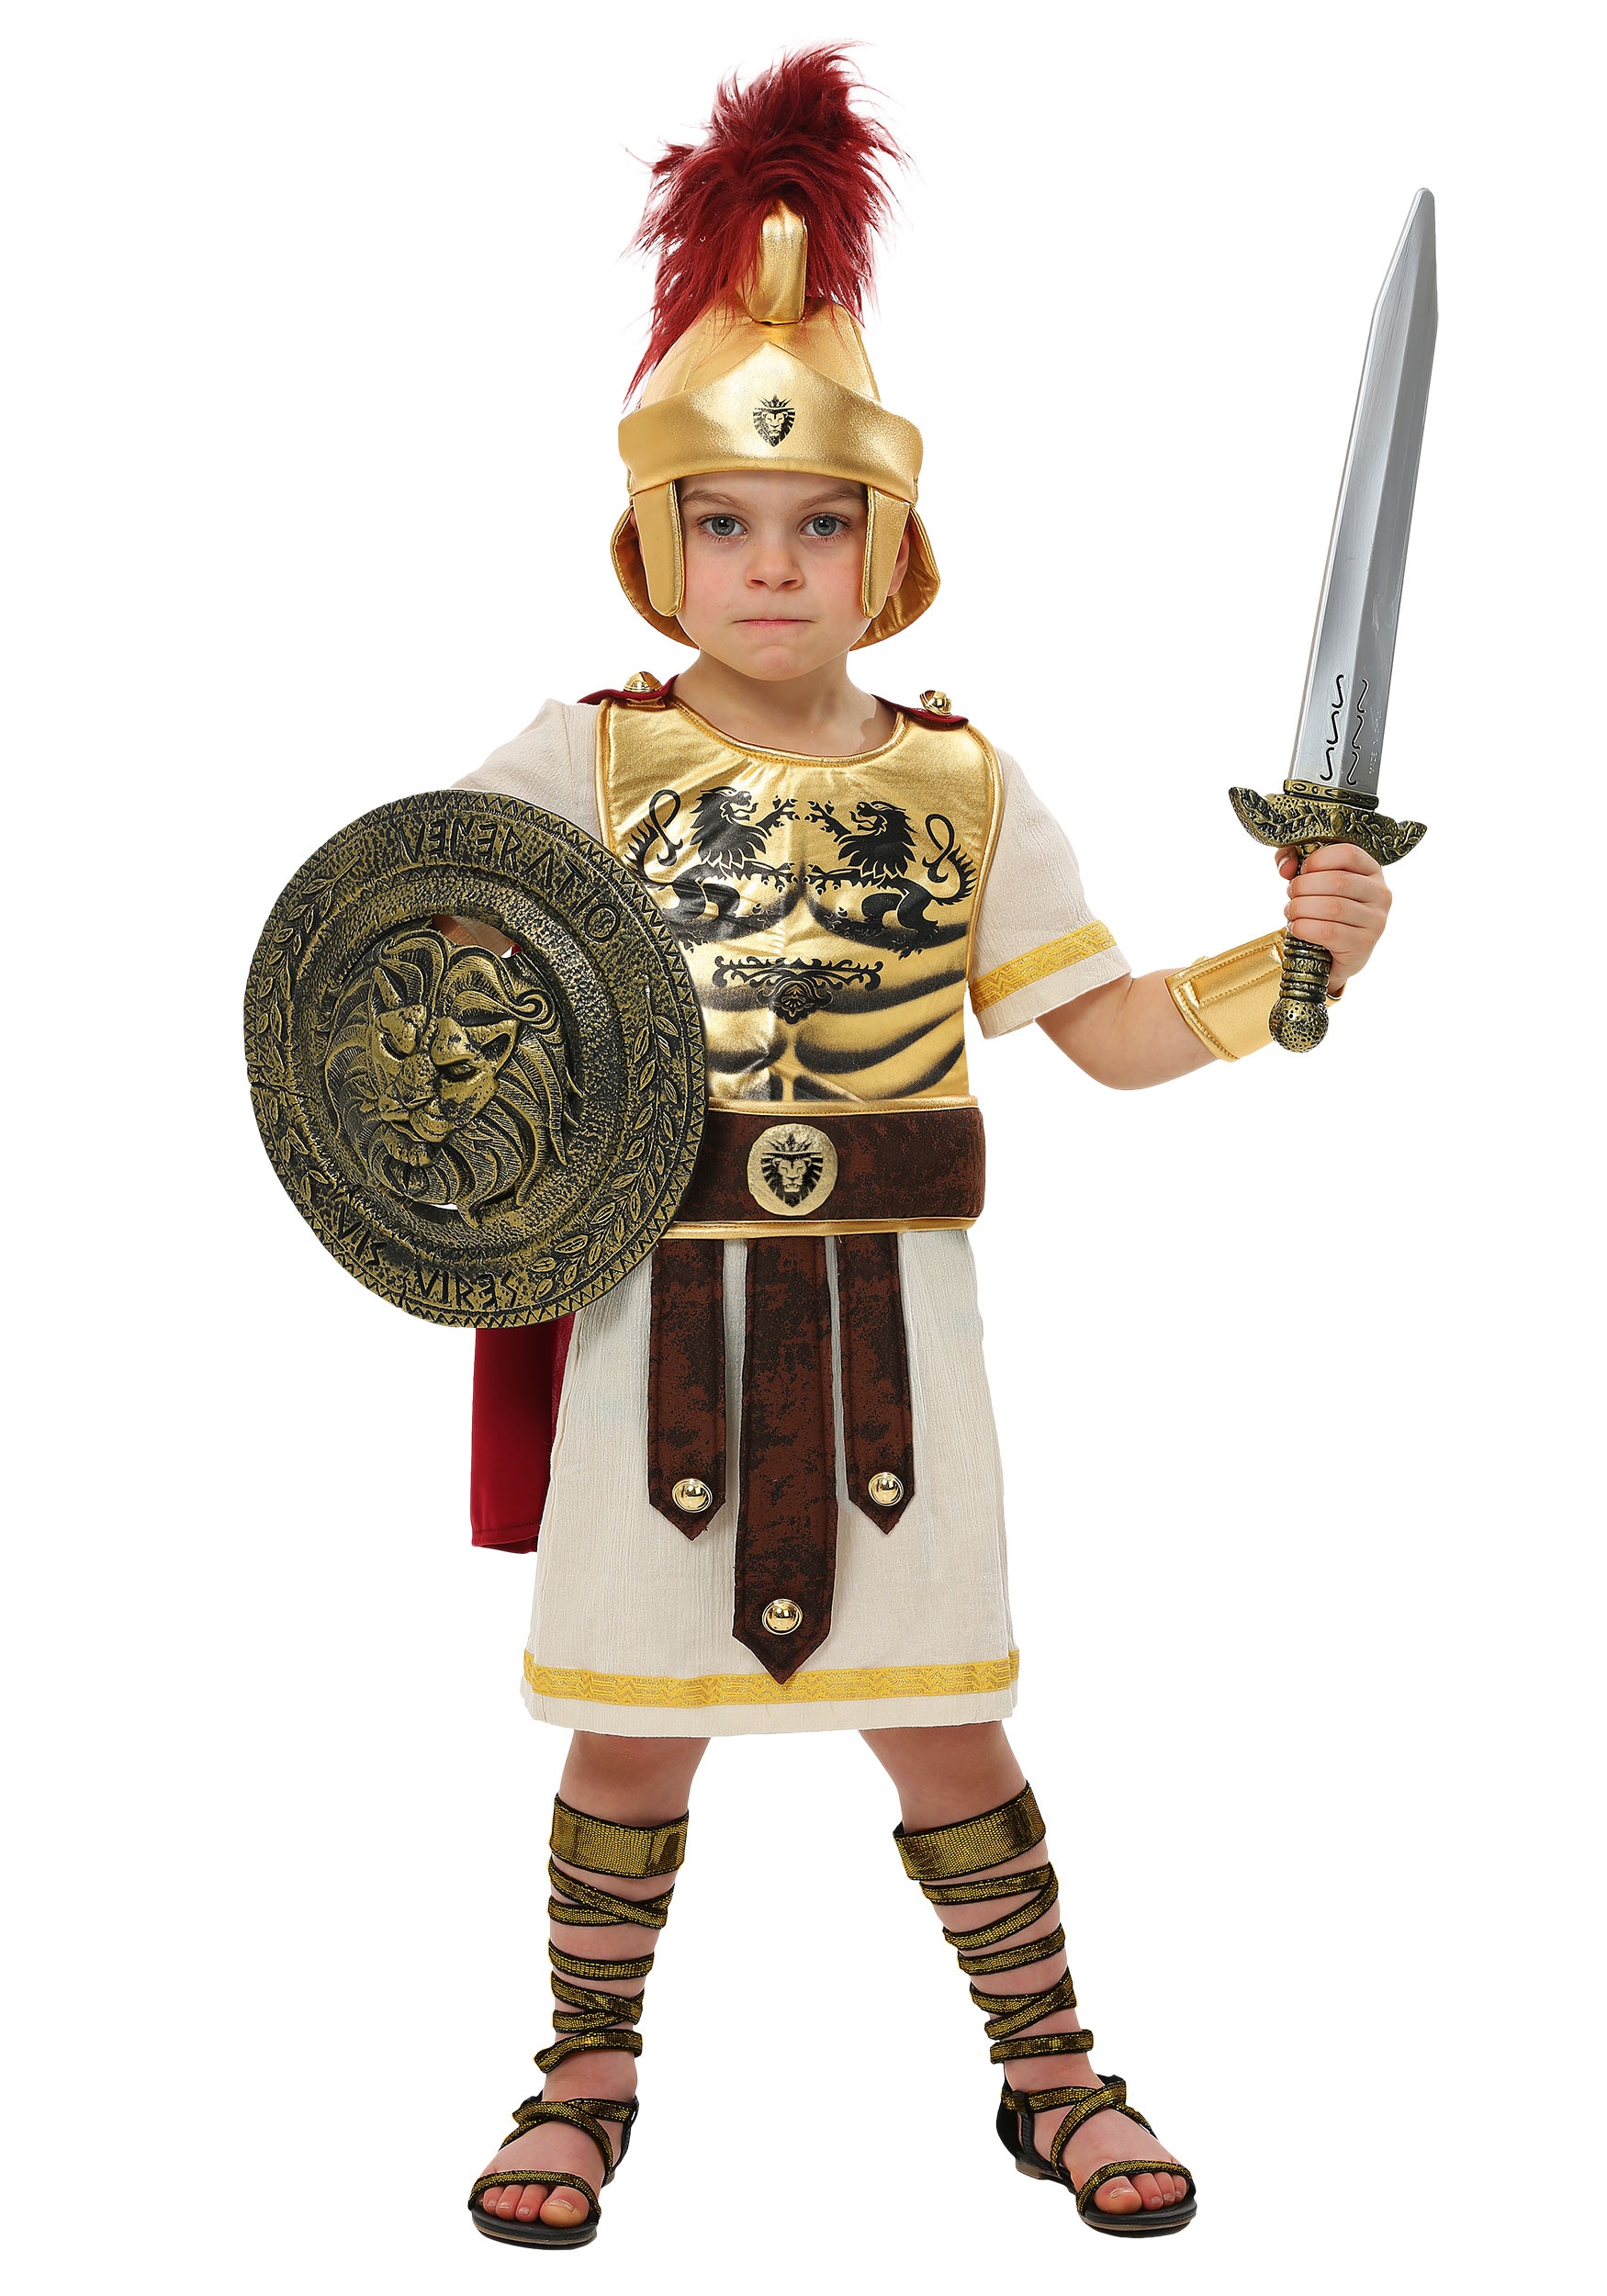 Boy's Gladiator Champion Toddler Costume